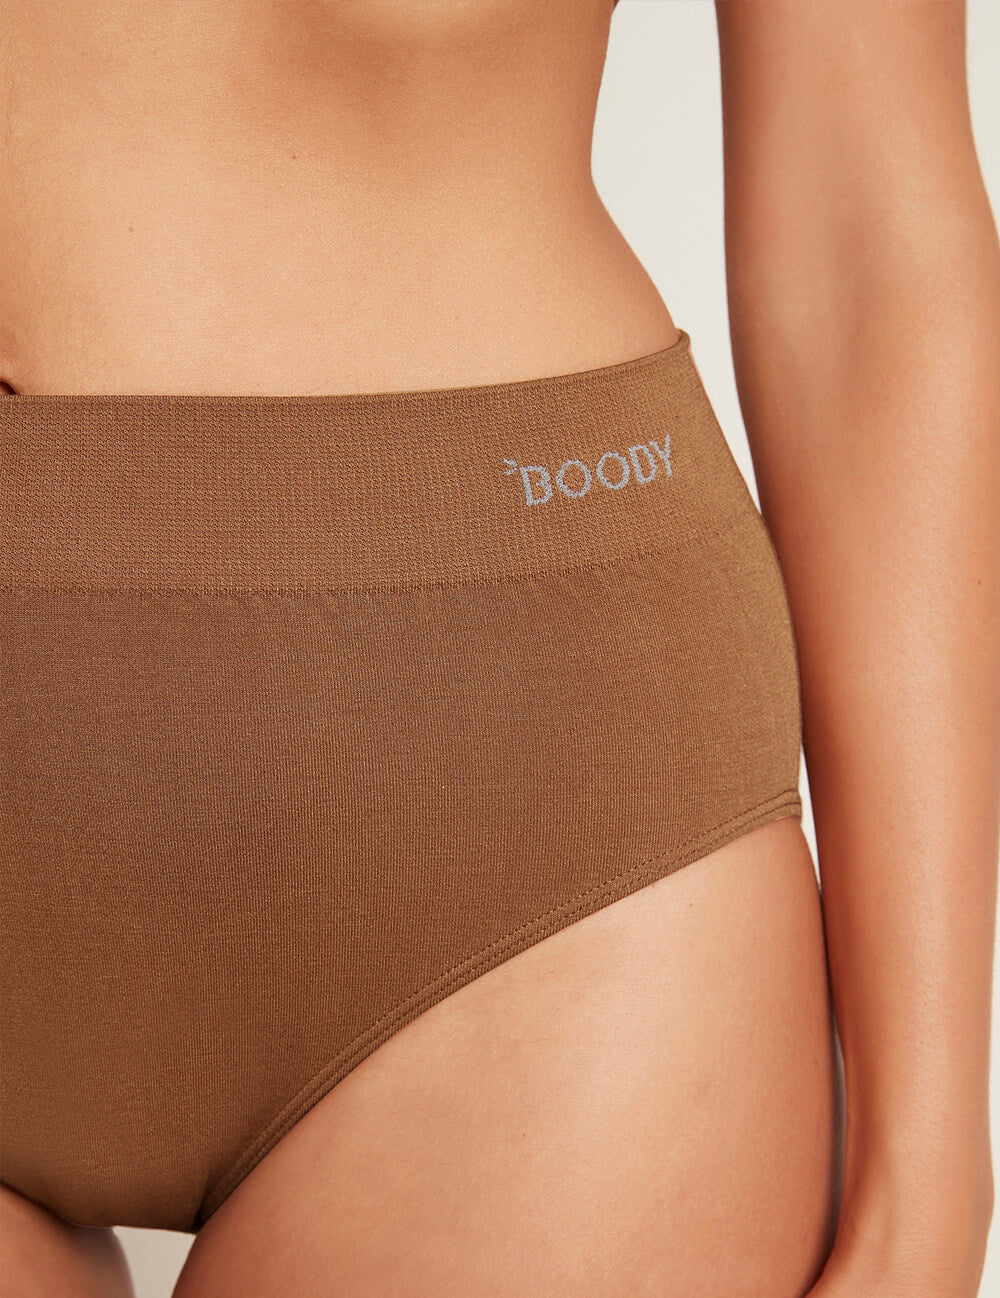 Boody, Women's Midi Briefs, Organic Bamboo Underwear